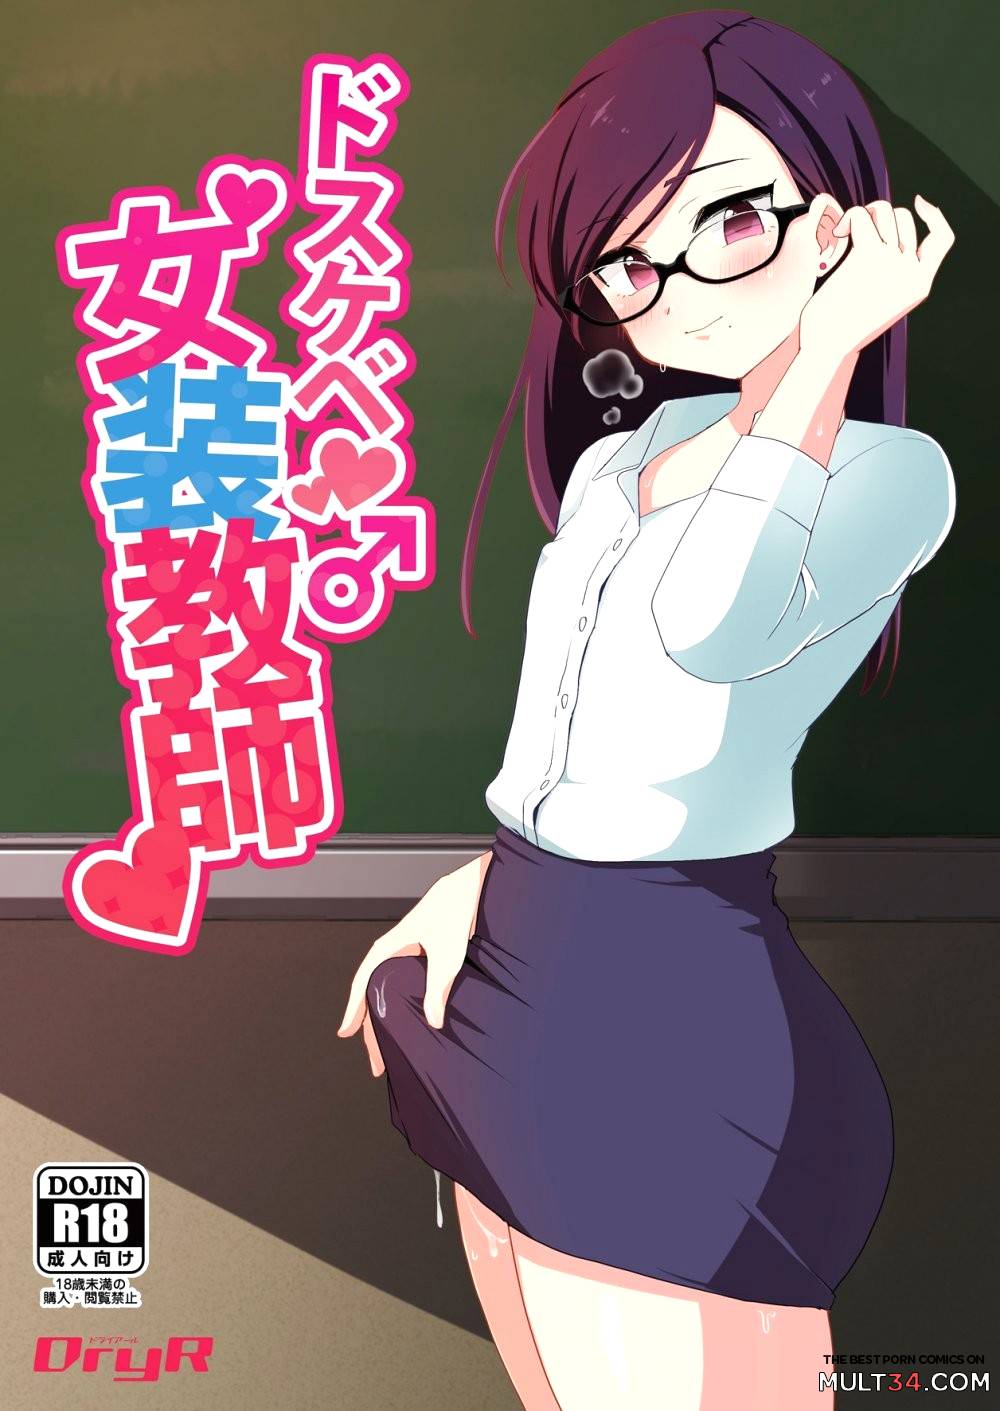 Crossdressing manga porn